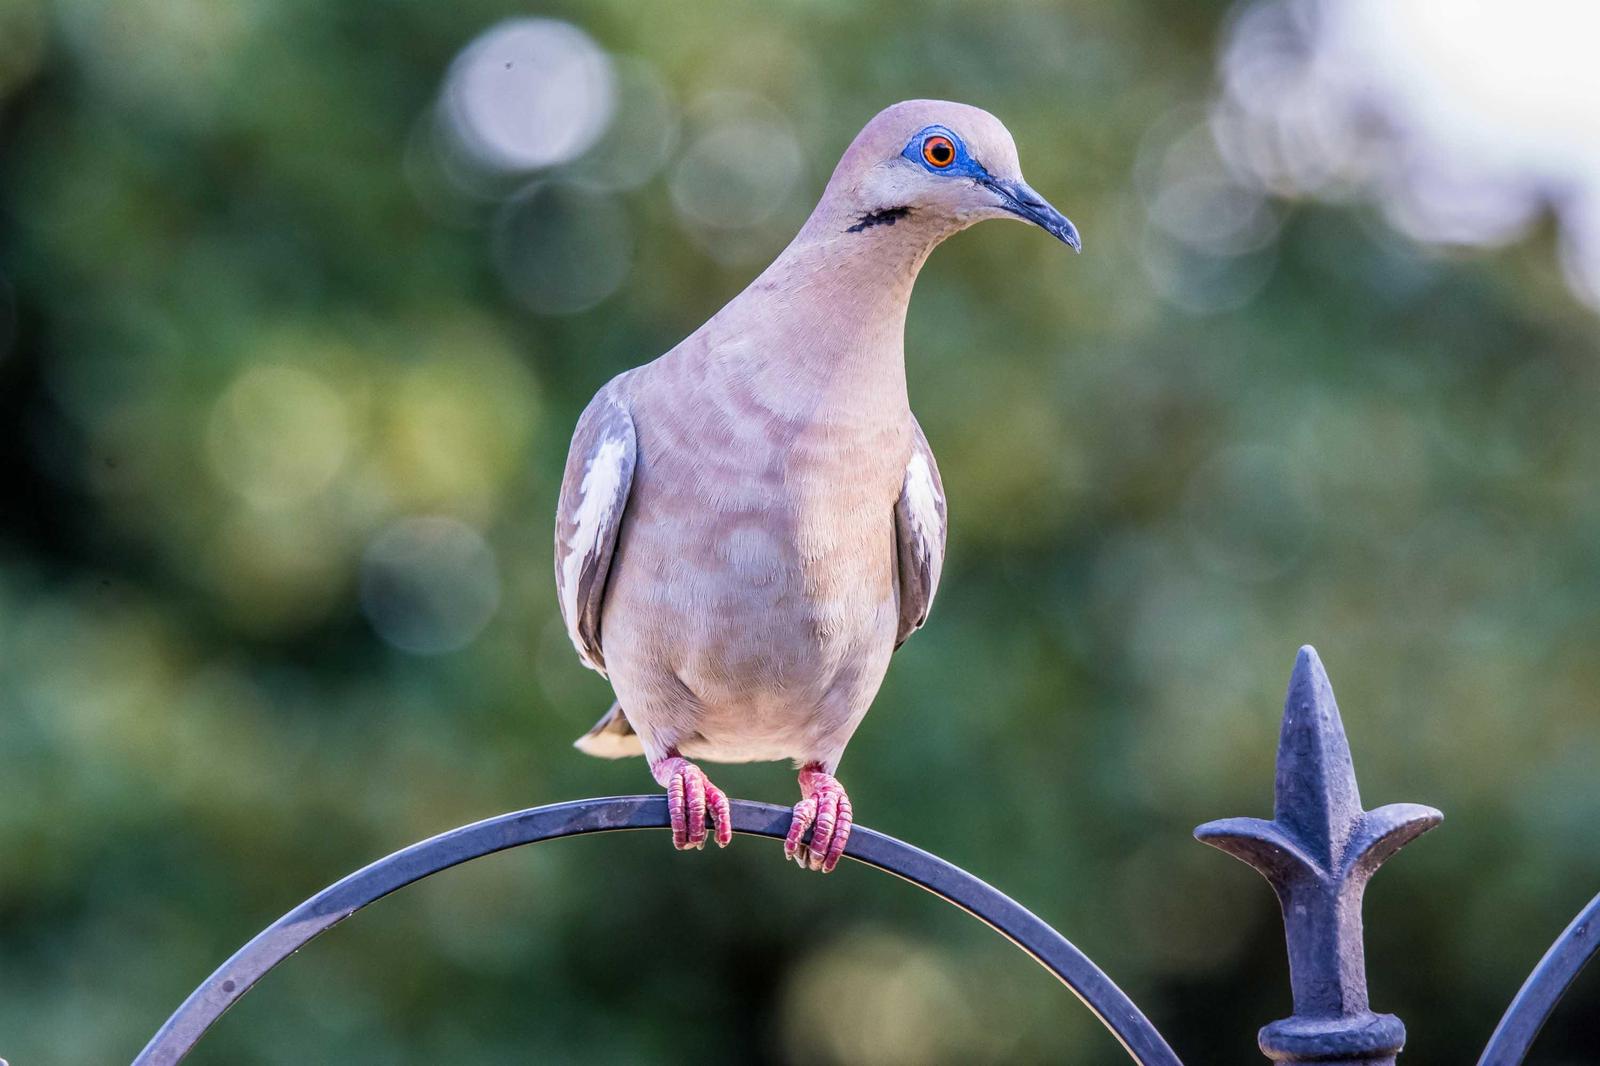 White-winged Dove Photo by Tyrone Shipiro